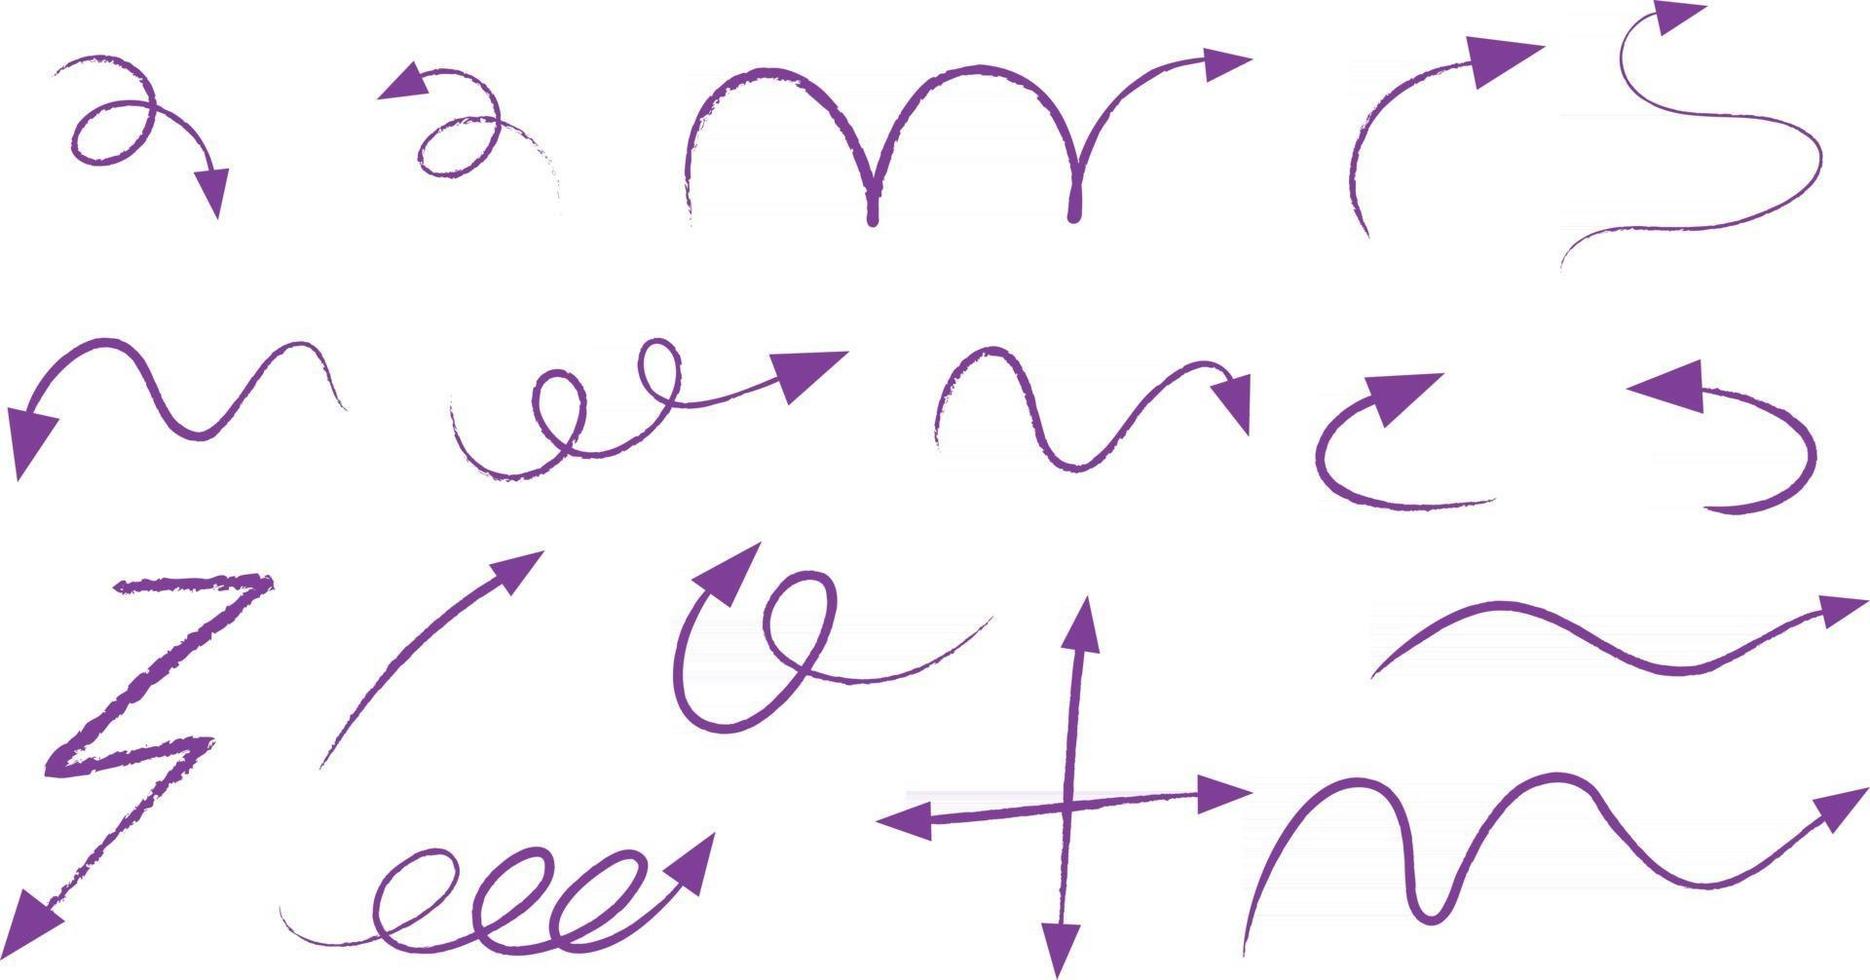 Diferentes tipos de flechas curvas dibujadas a mano de color púrpura sobre fondo blanco. vector